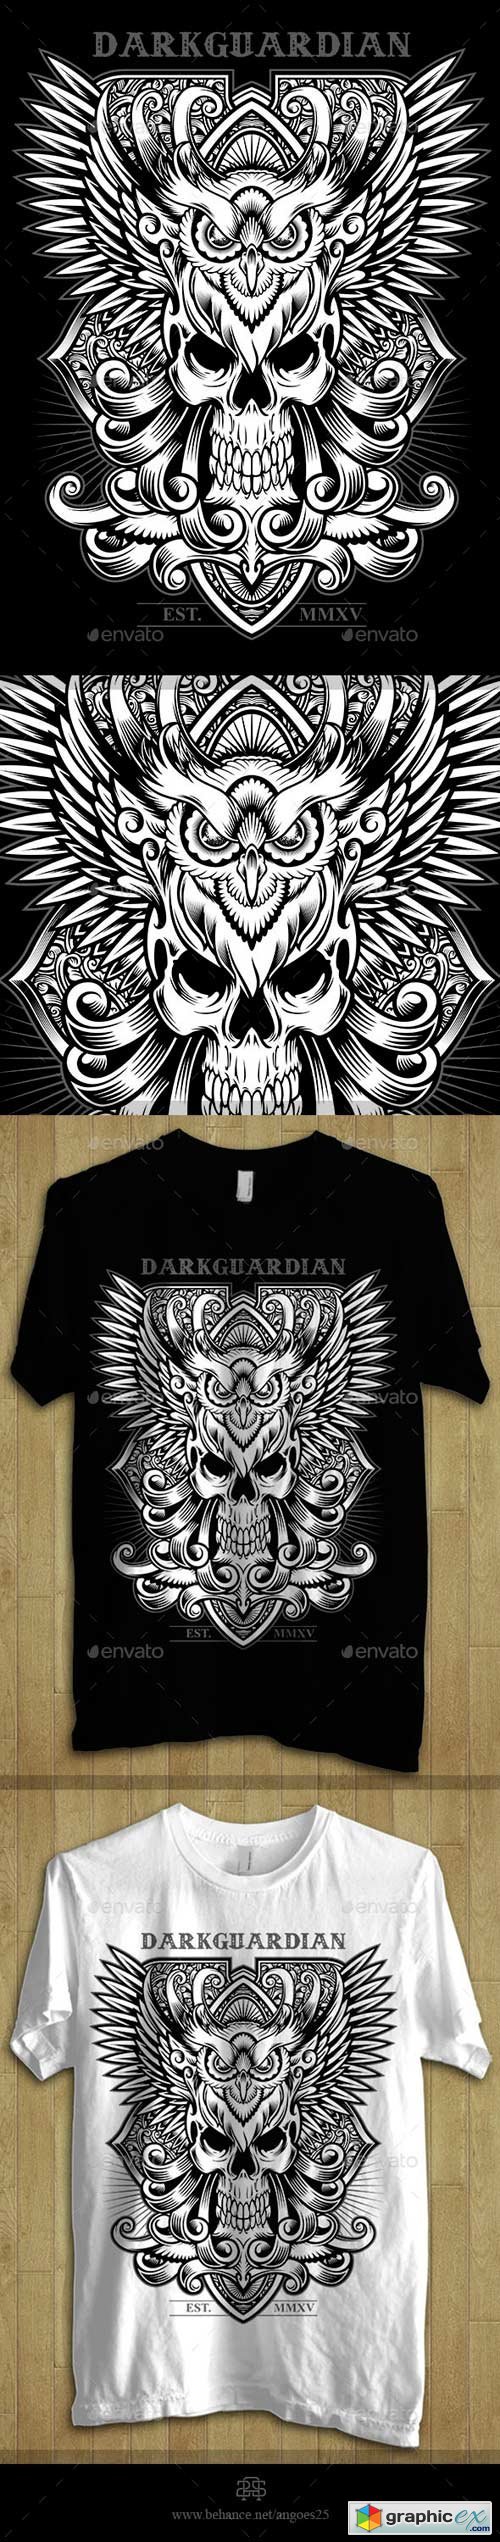 Darkguardian